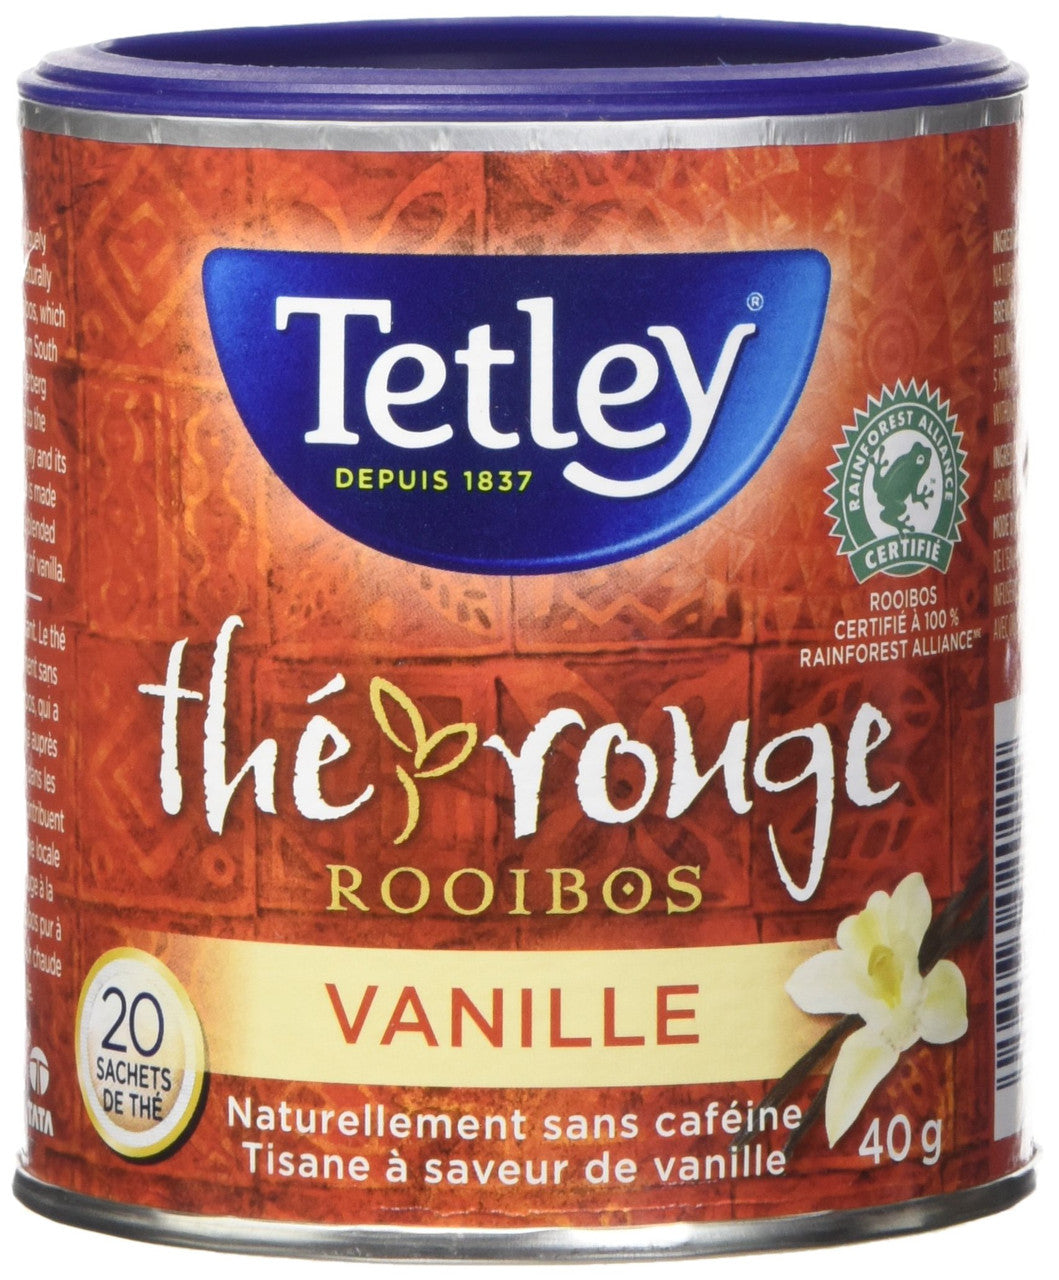 Tetley Tea Rooibos Vanilla (Red-Tea), 20 Tea Bags, 40g/1.41oz, (Imported from Canada)